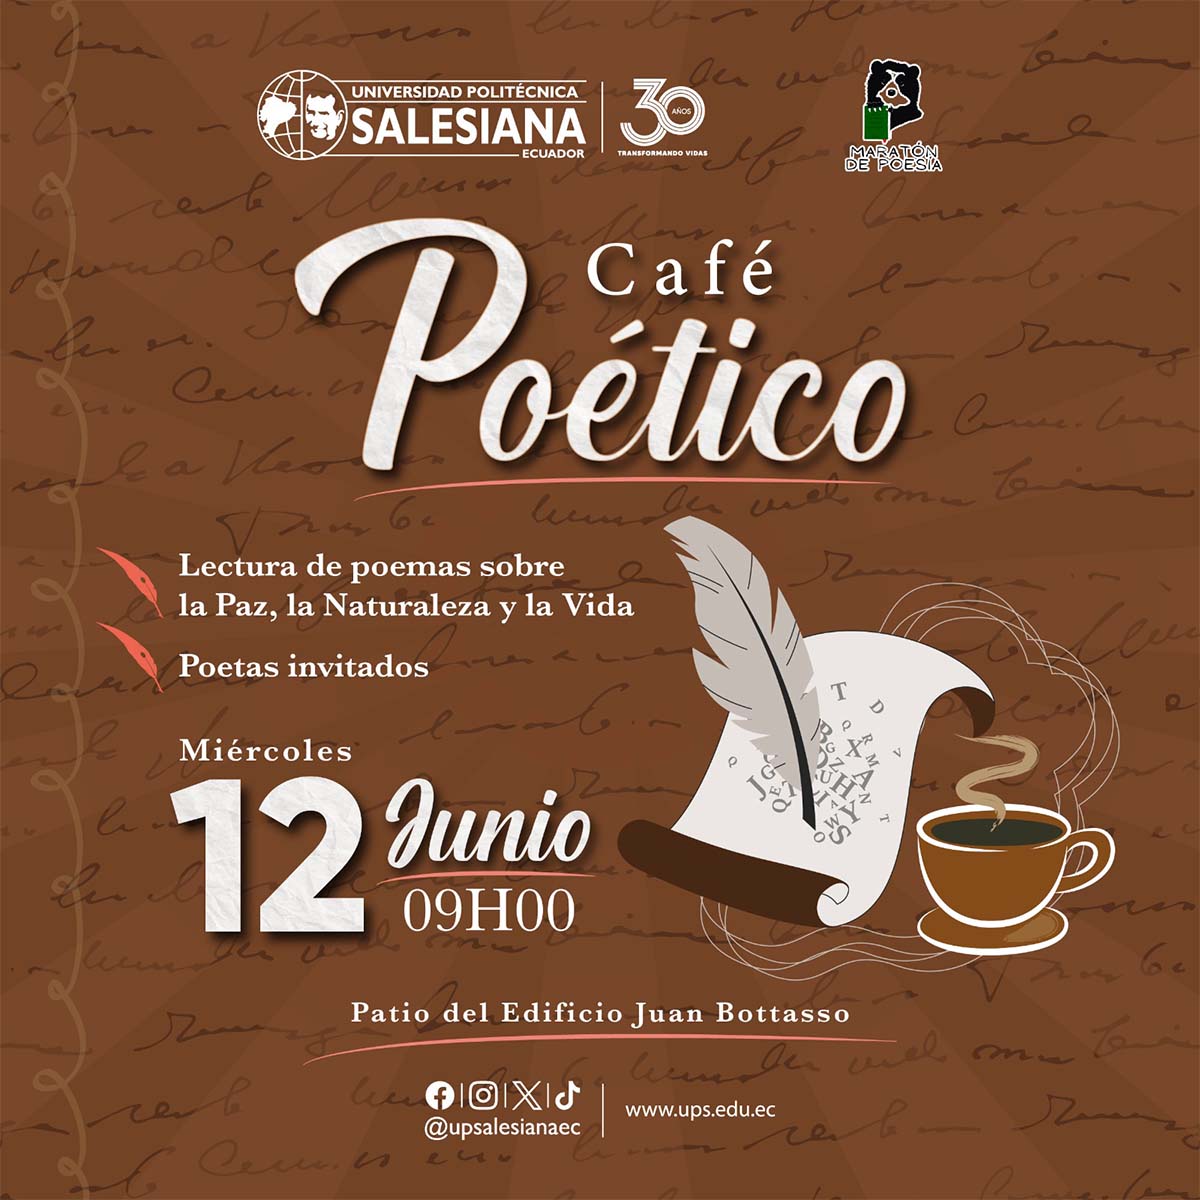 Afiche promocional del Café Poético